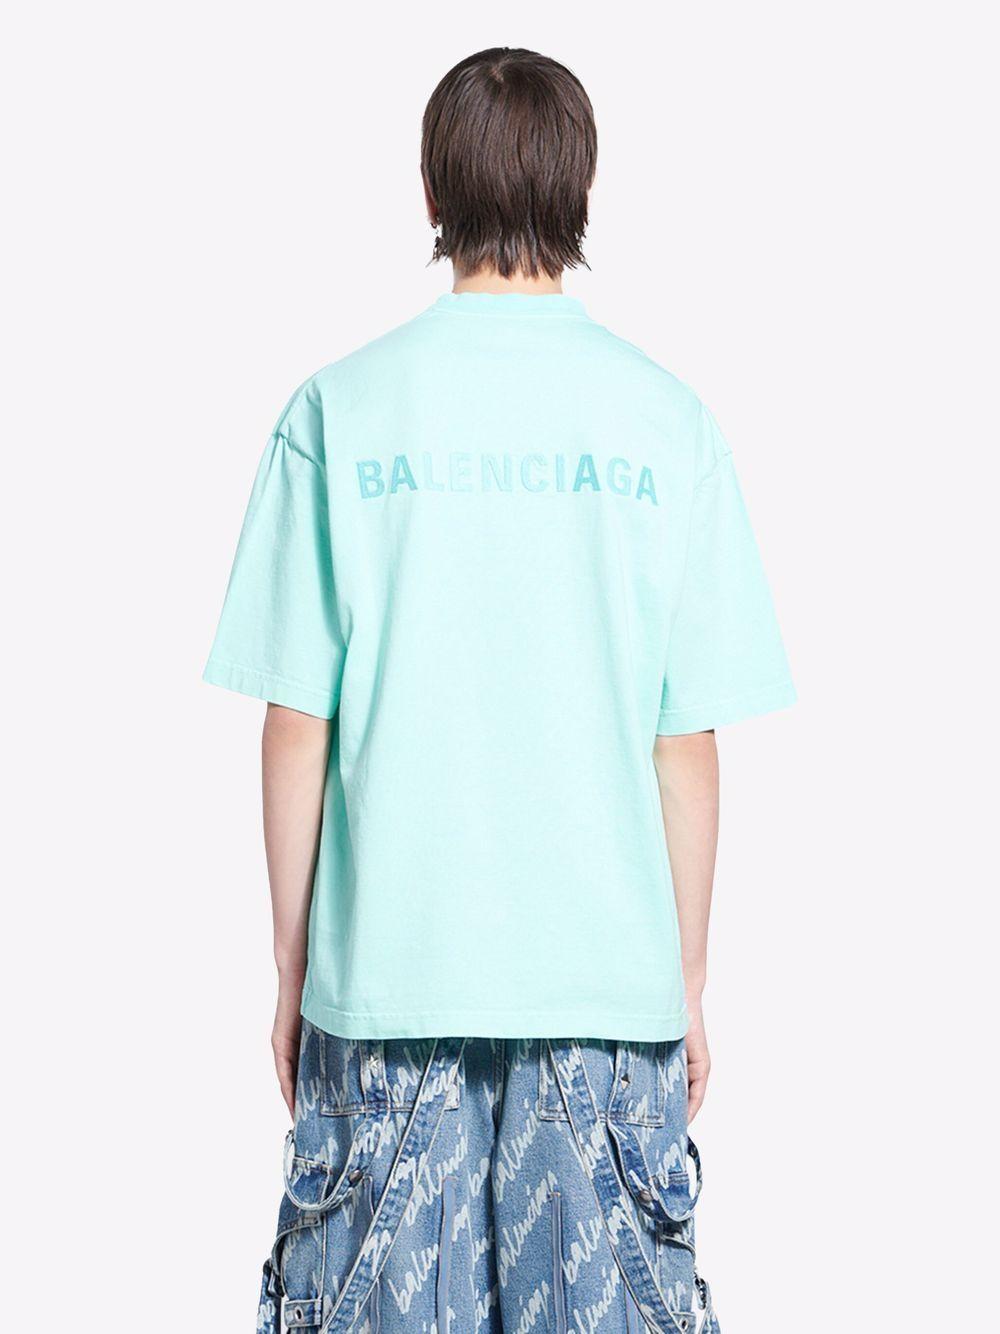 Balenciaga Medium-fit Logo-print T-shirt in Green for Men - Save 12% | Lyst